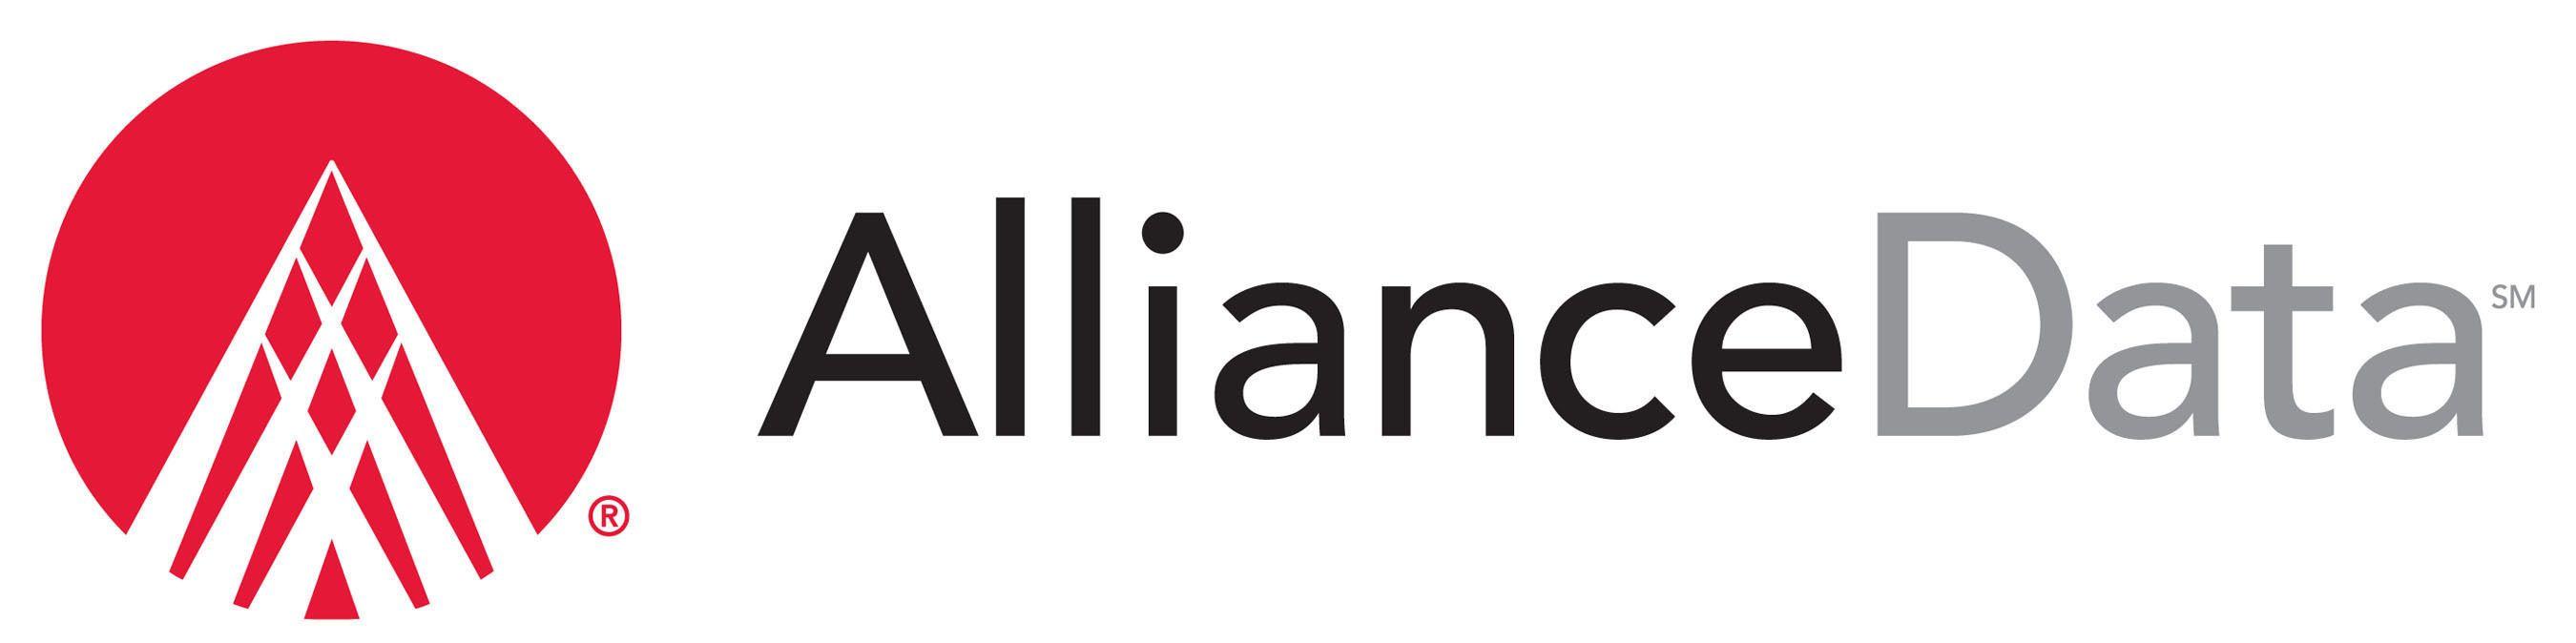 LoyaltyOne Logo - Alliance Data's LoyaltyOne Business Announces Multi-Year Consulting ...